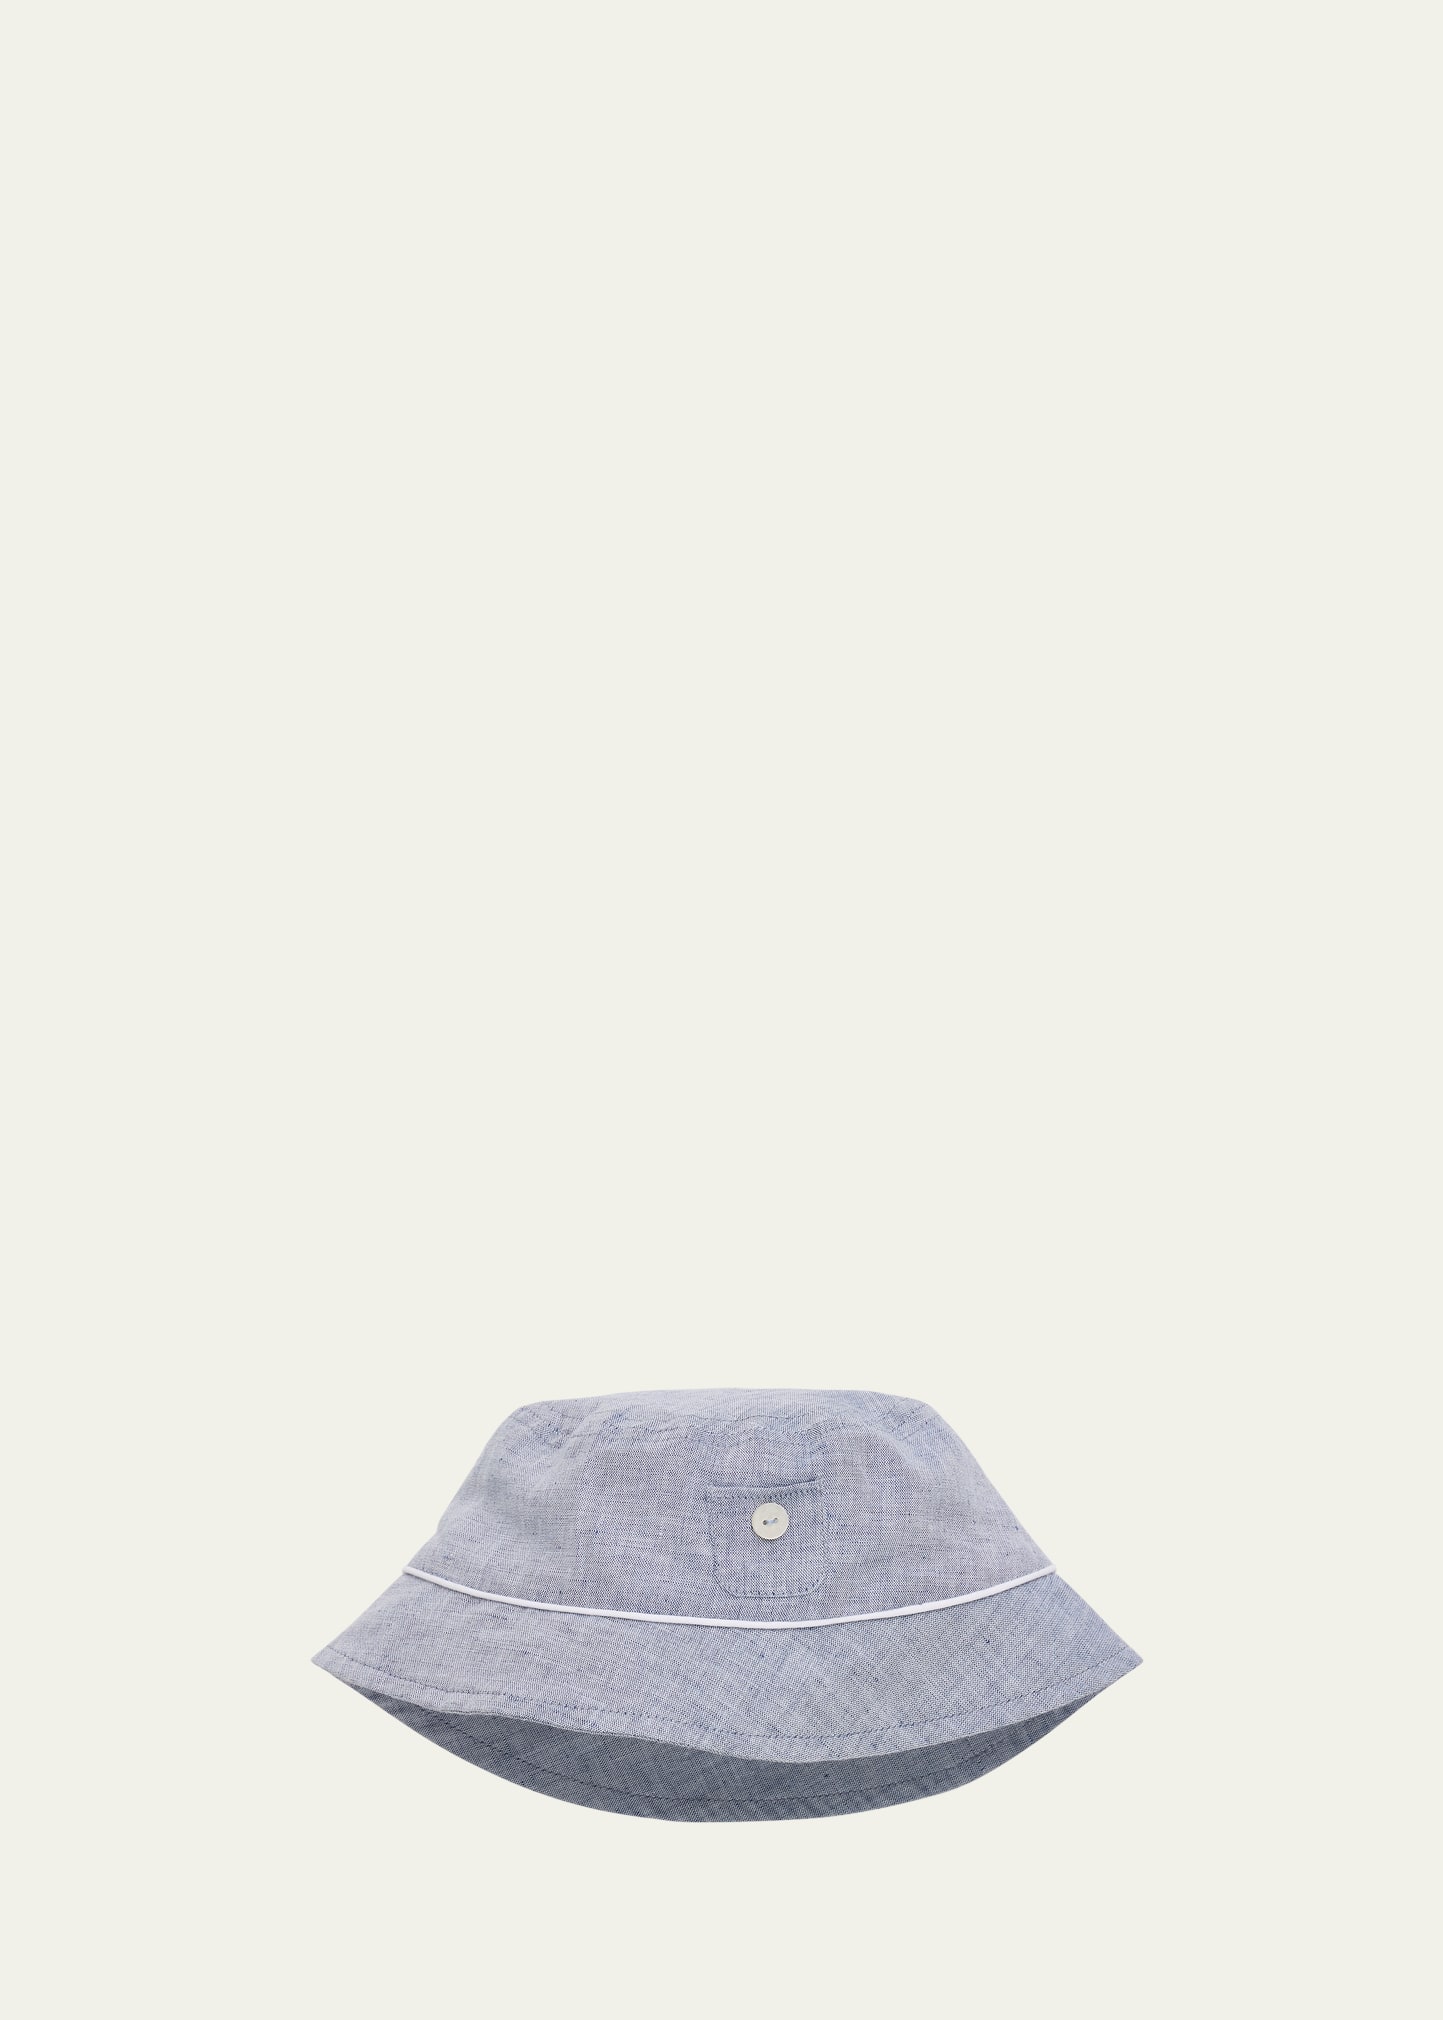 Boy's Bucket Hat, Size 5-7